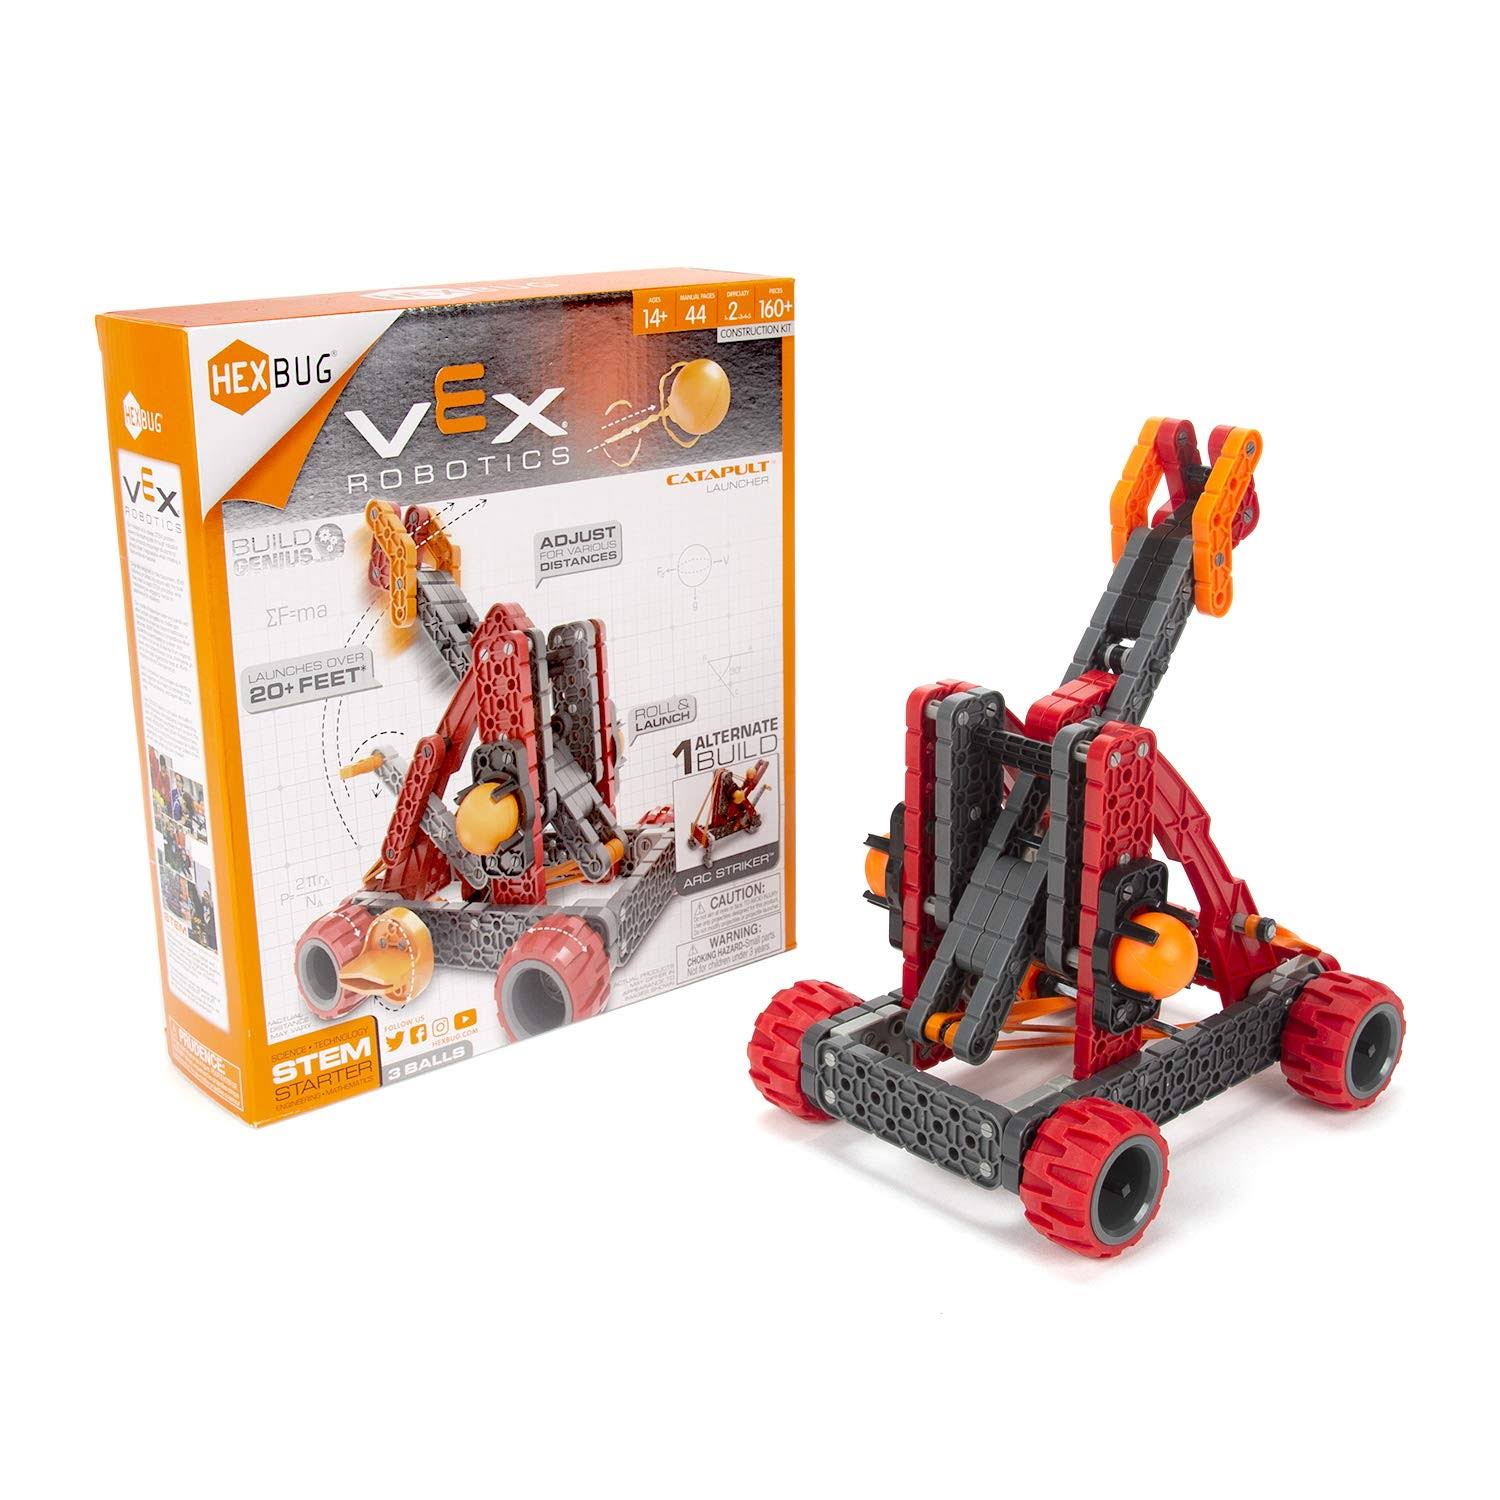 Hexbug VEX Robotics Catapult 2.0